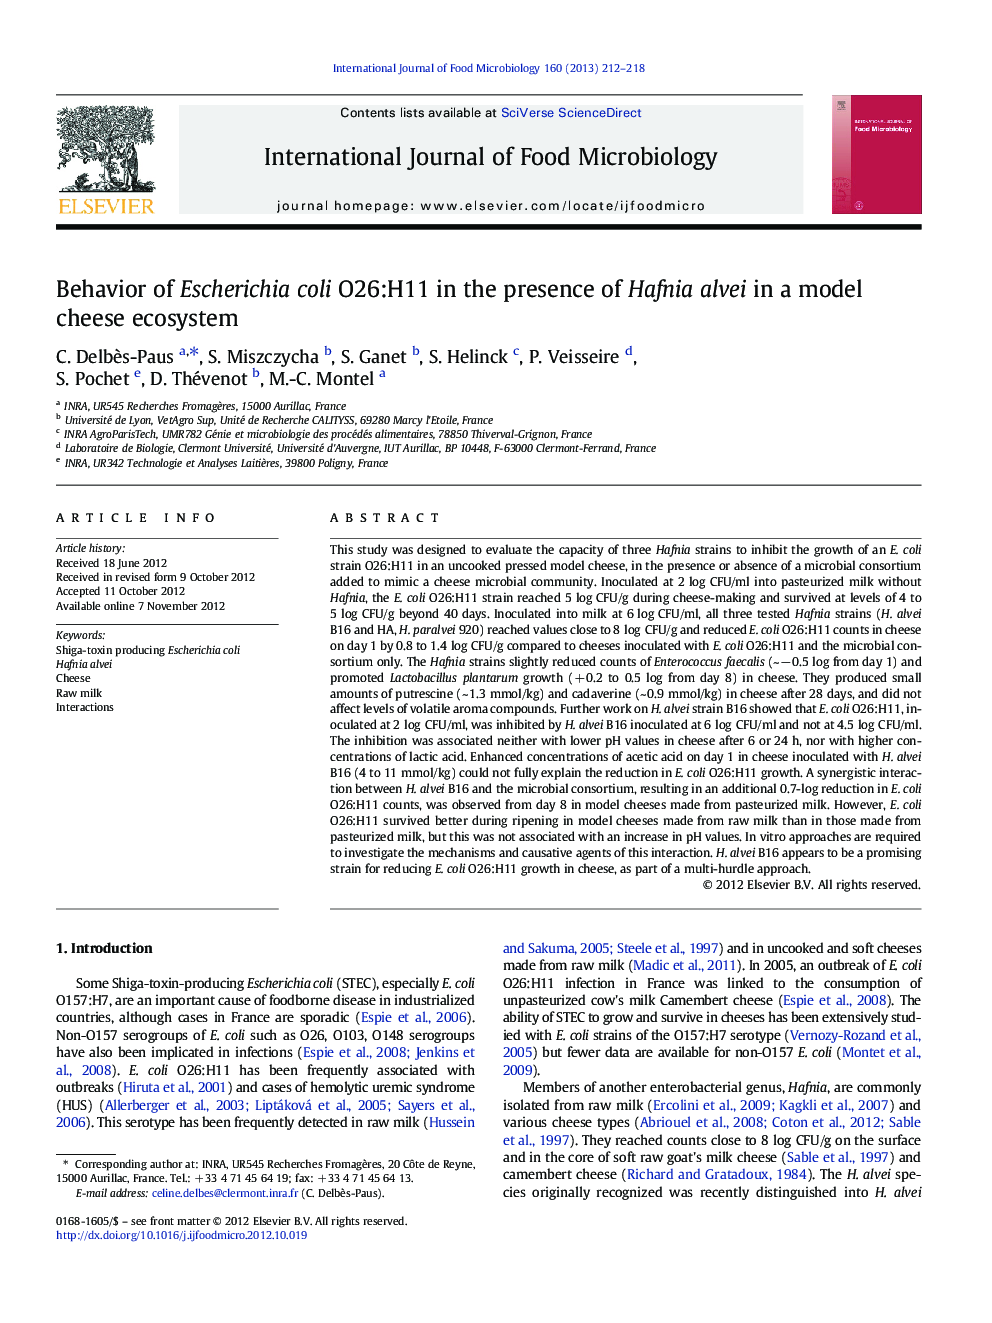 Behavior of Escherichia coli O26:H11 in the presence of Hafnia alvei in a model cheese ecosystem